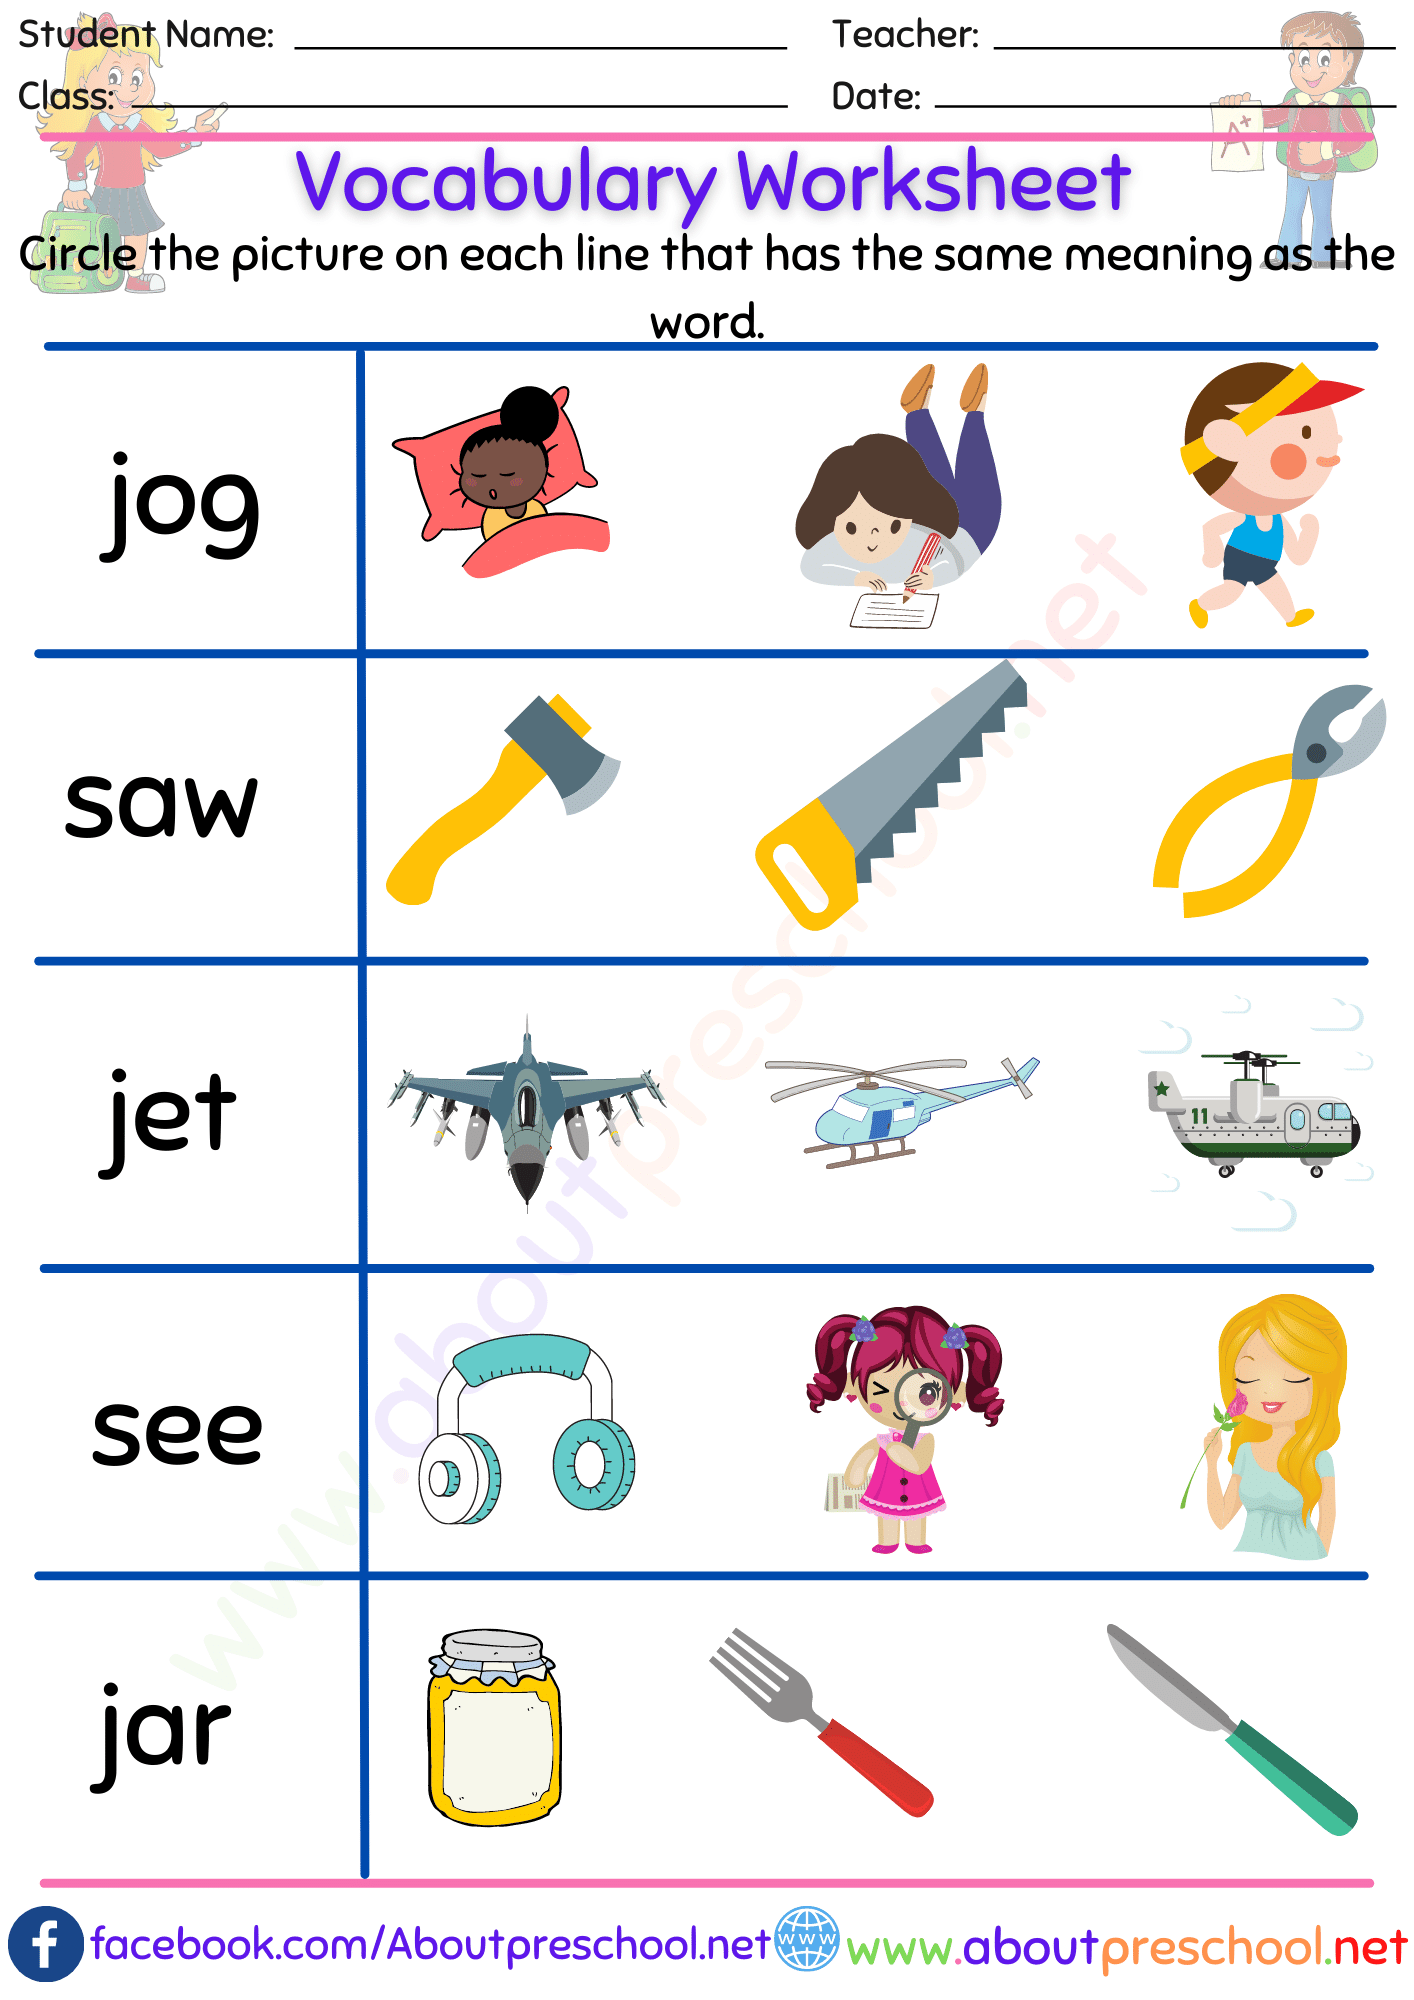 Vocabulary Worksheet 9